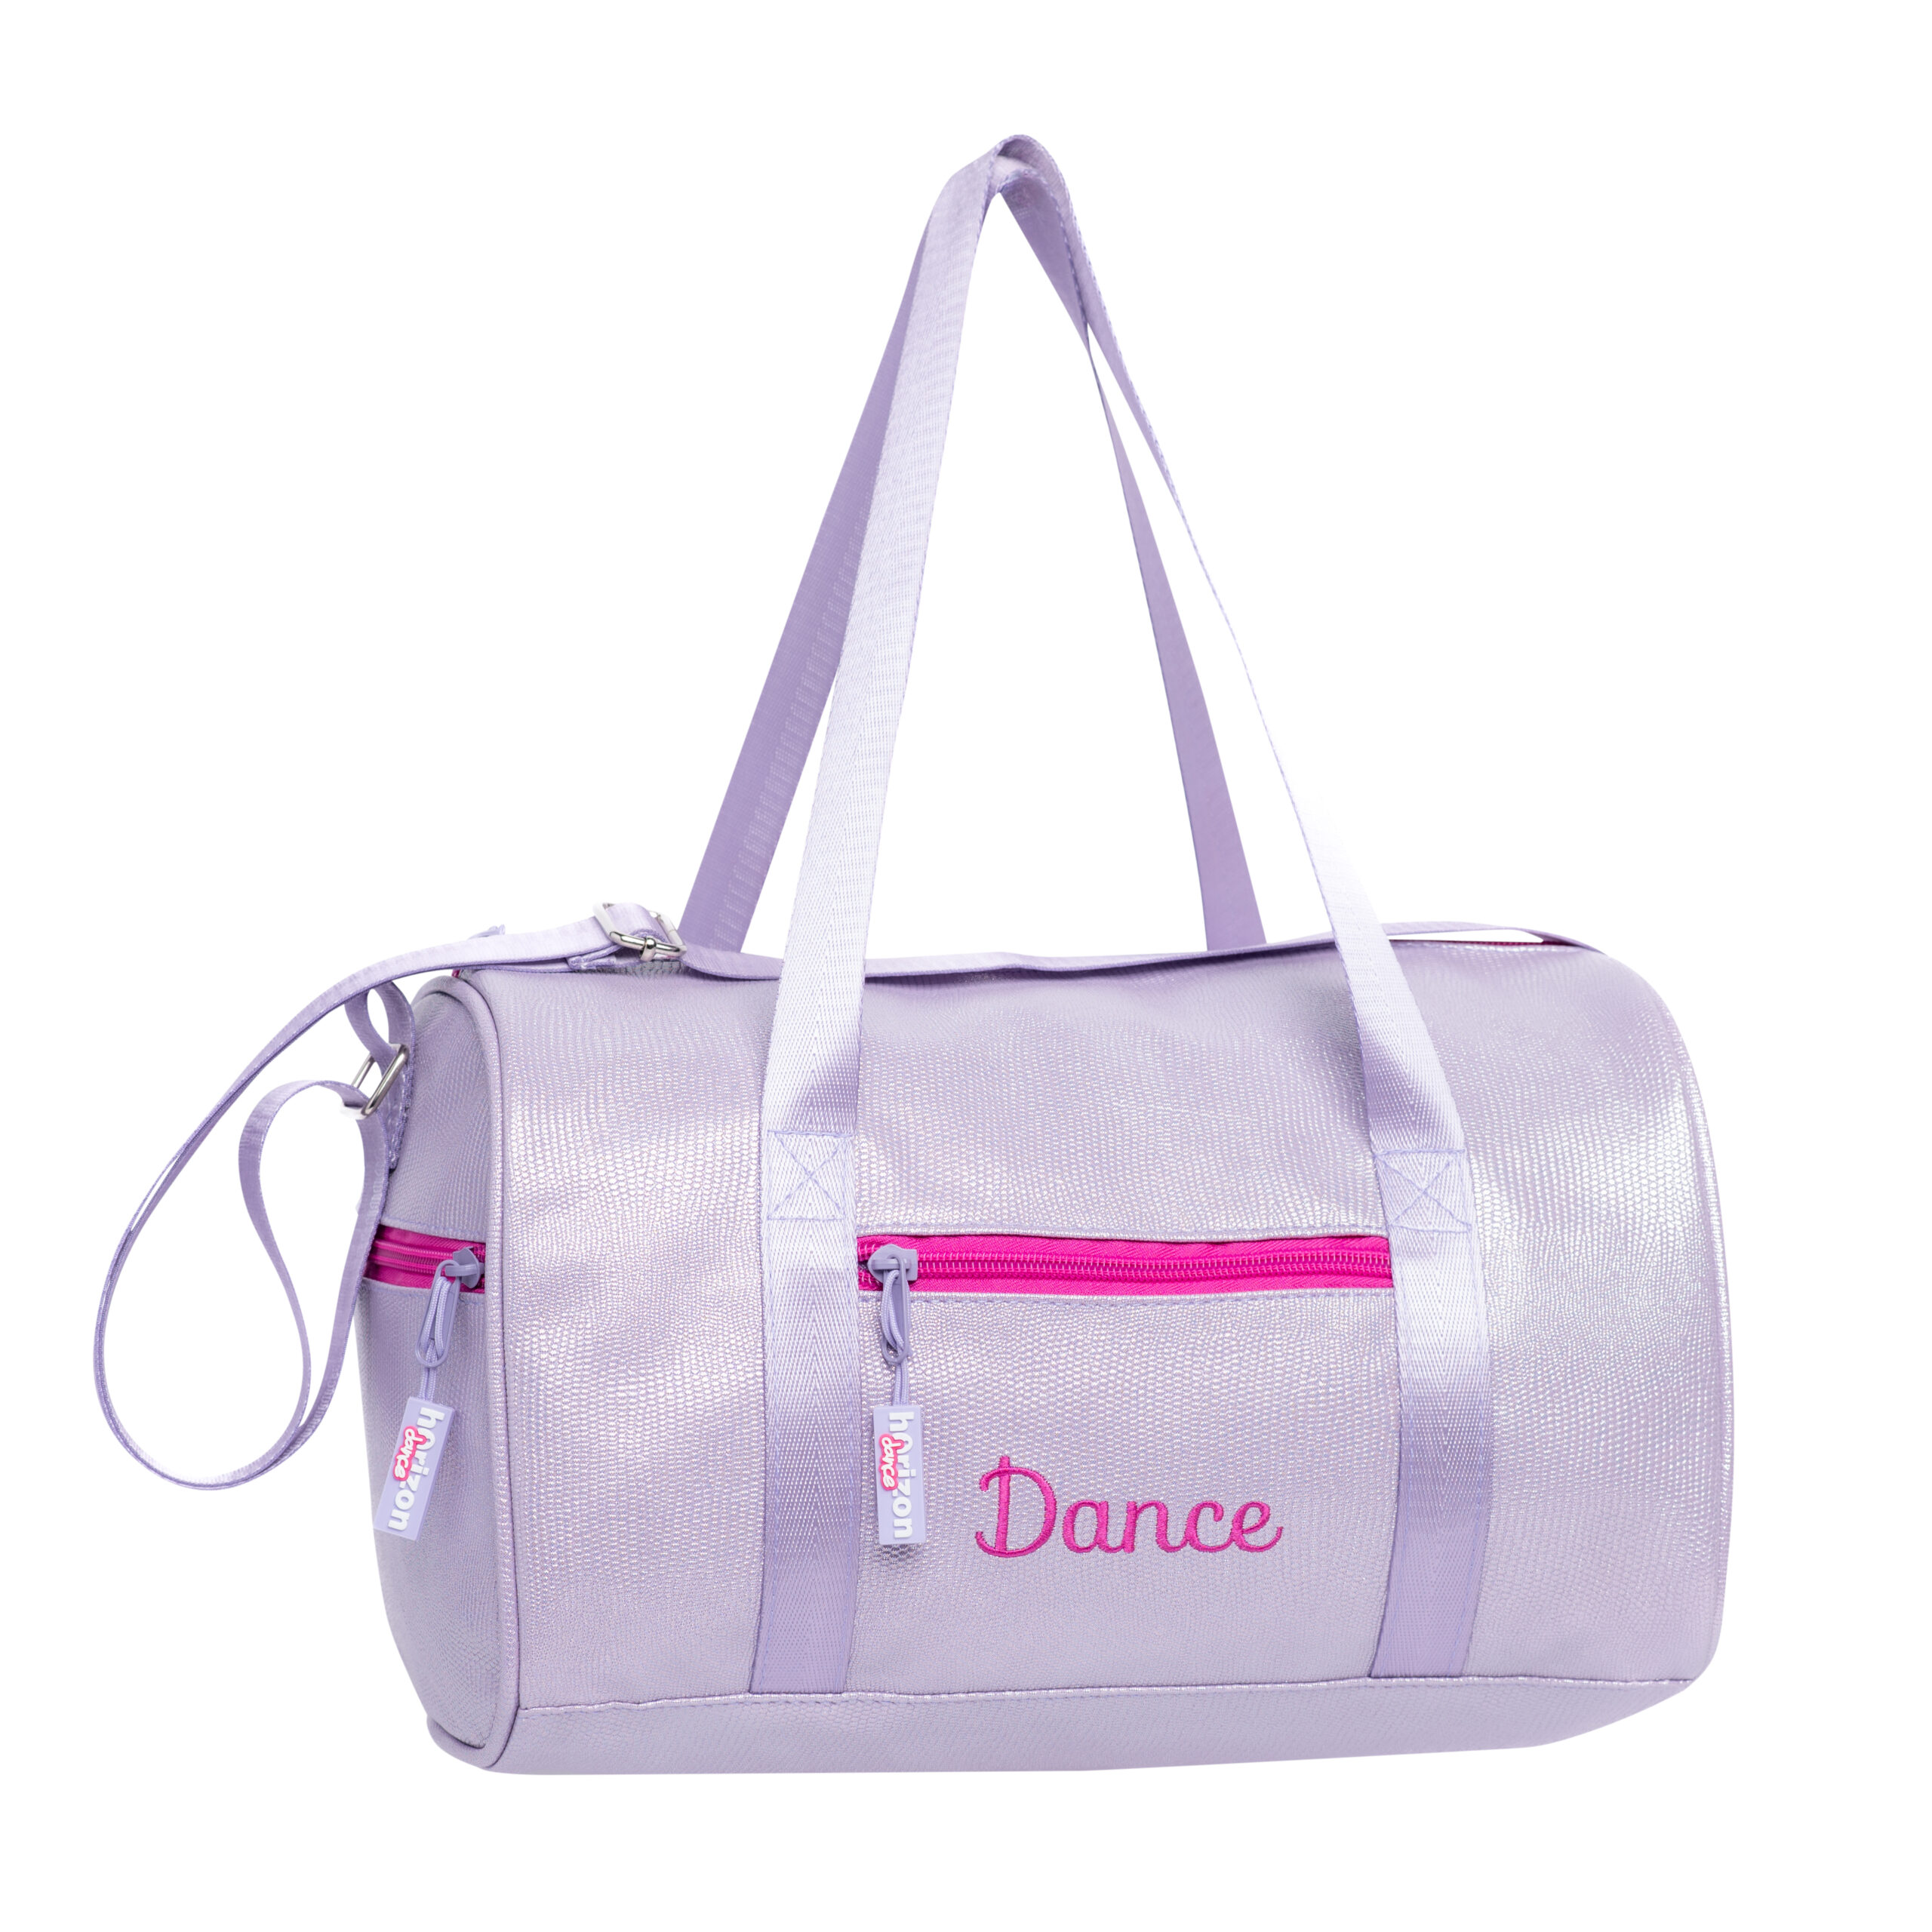 4344 - Glamour Duffel - Lavender - NEW! - Horizon Dance Bags